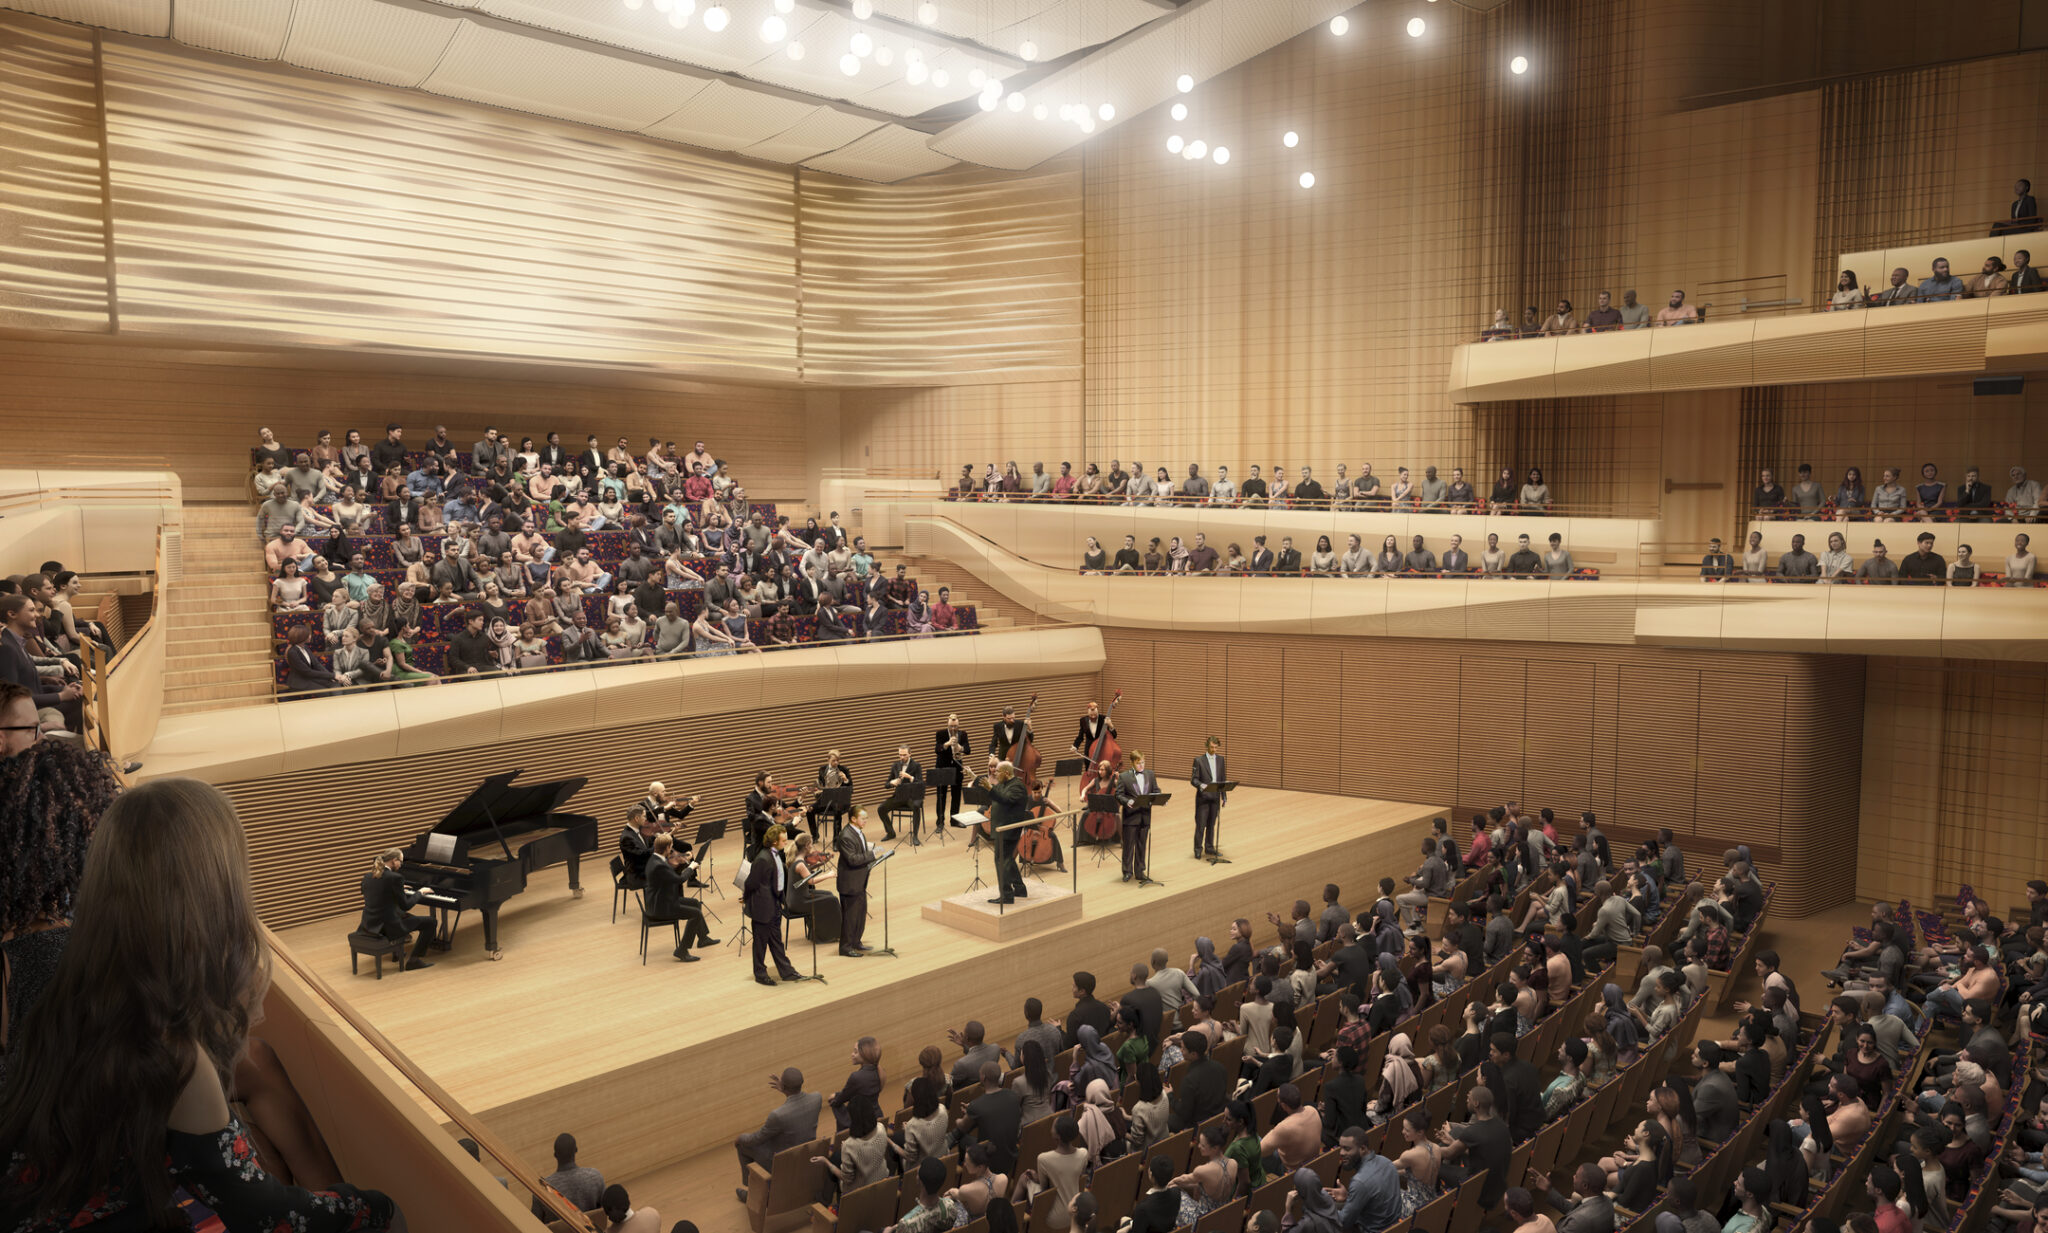 Bloomberg: New York Philharmonic Will Open Geffen Hall Two Years Ahead